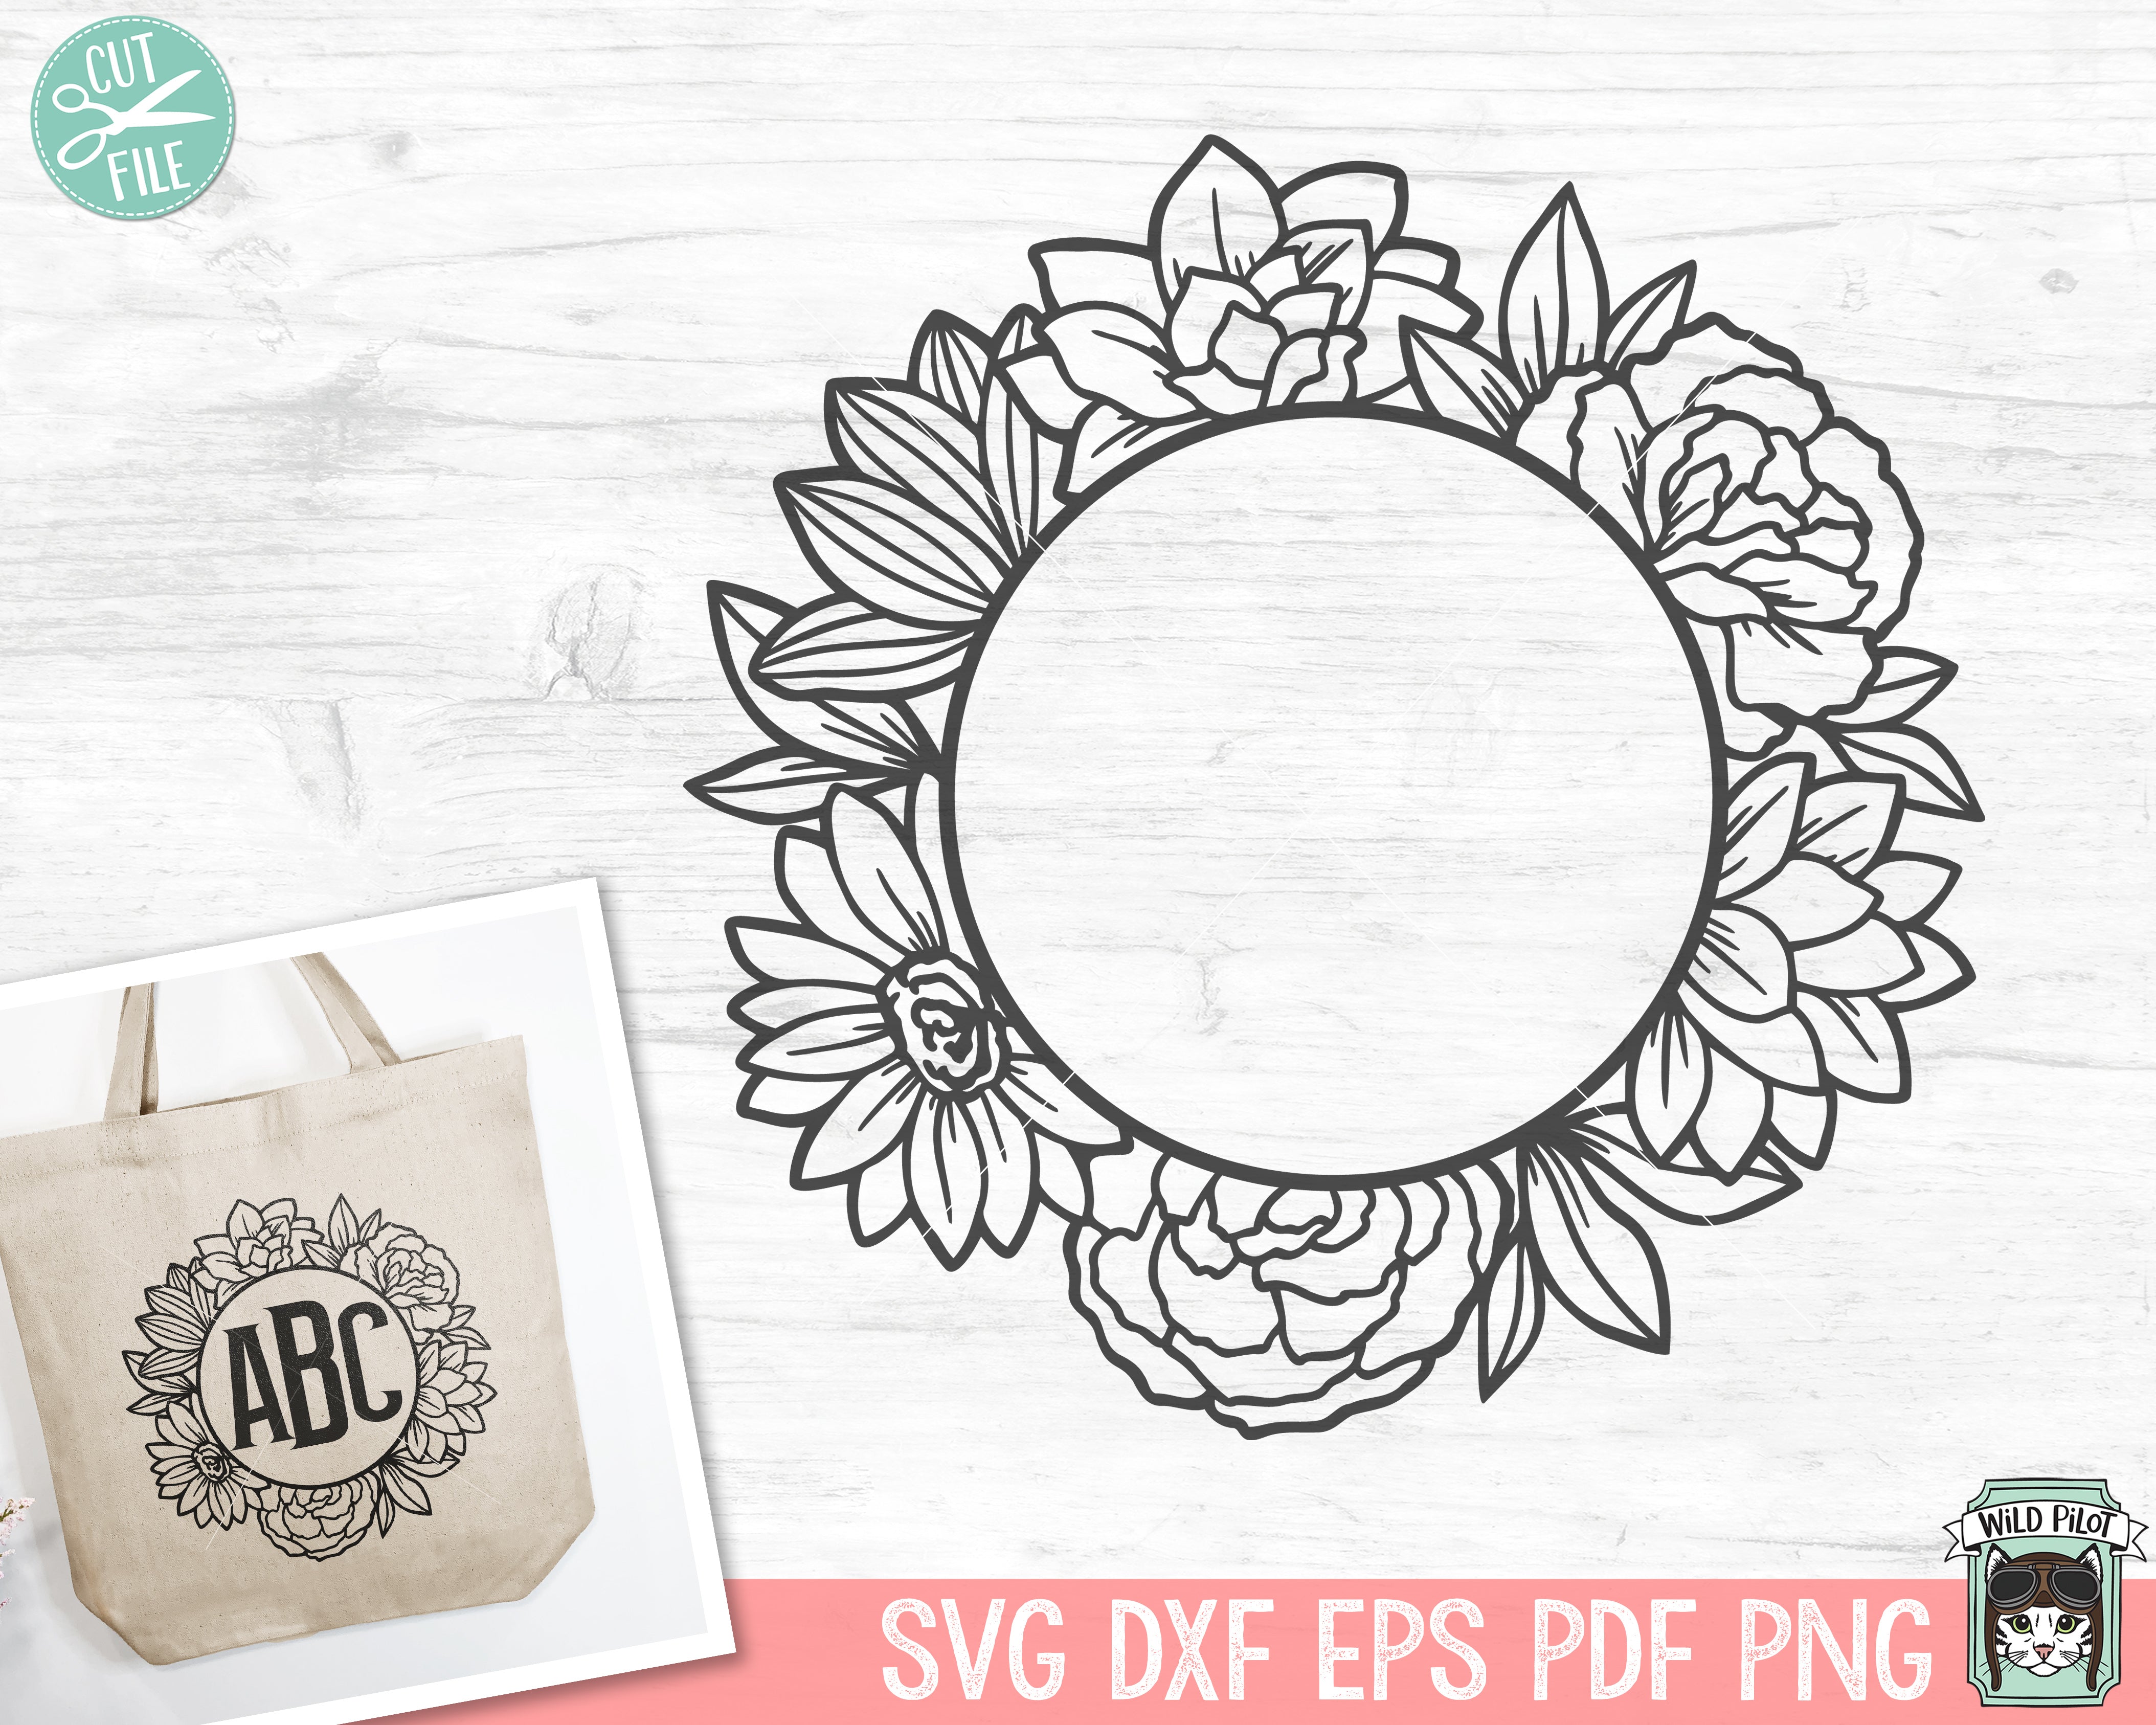 Circular Flowers Ornamental Frame Vector SVG Icon (2) - SVG Repo